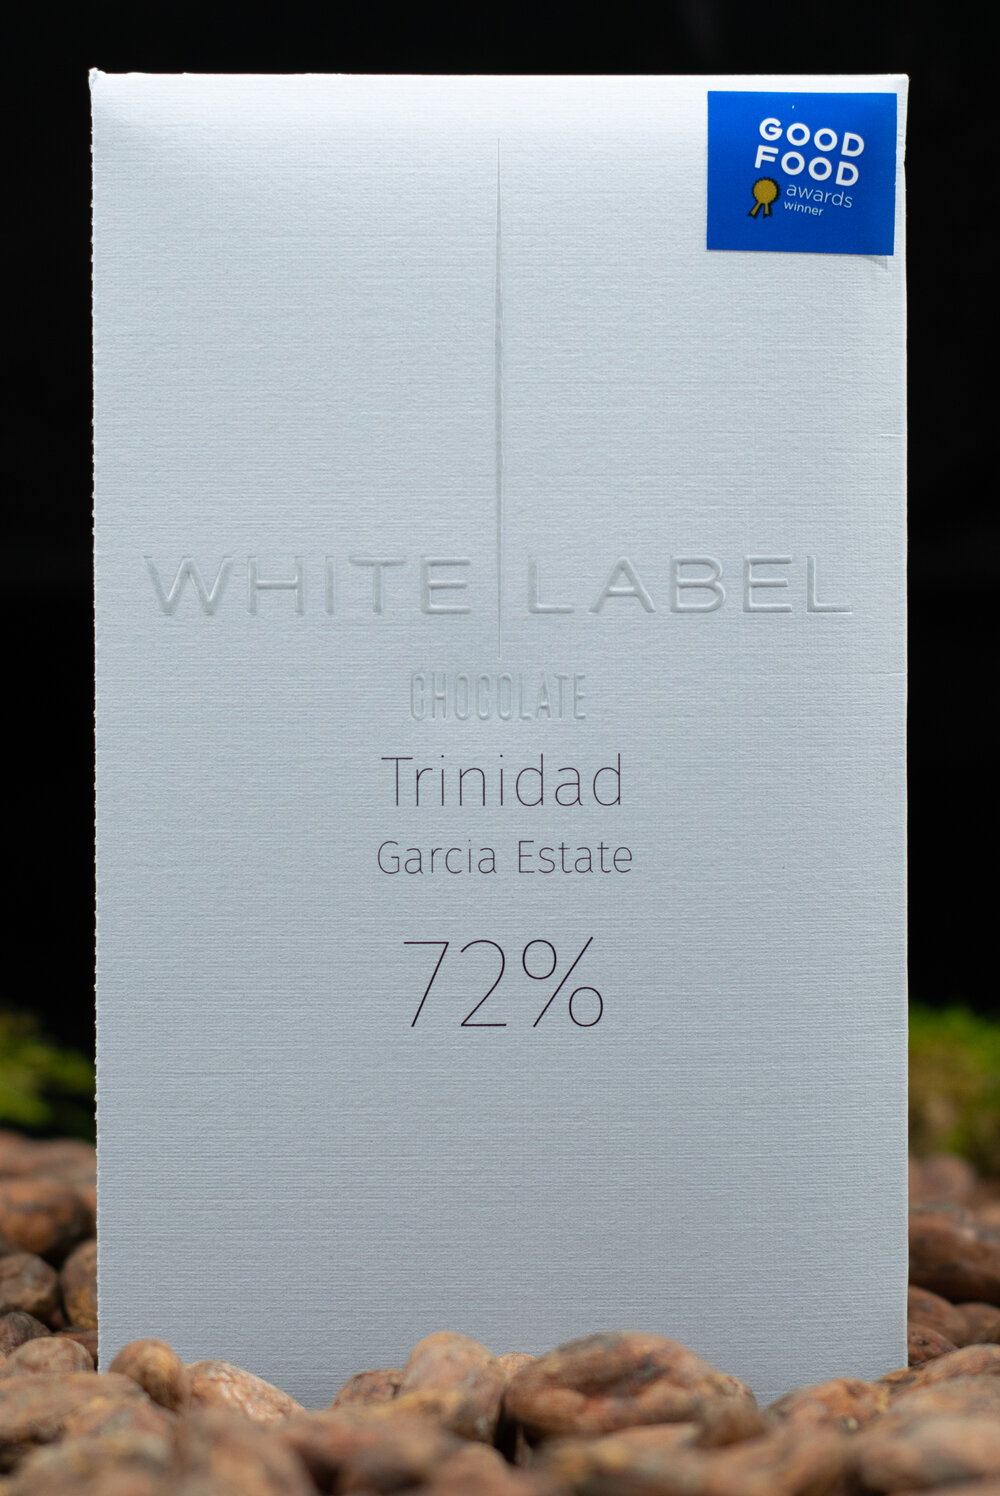 WHITE LABEL Chocolate | Dunkle Schokolade »Trinidad - Garcia Estate« 72%